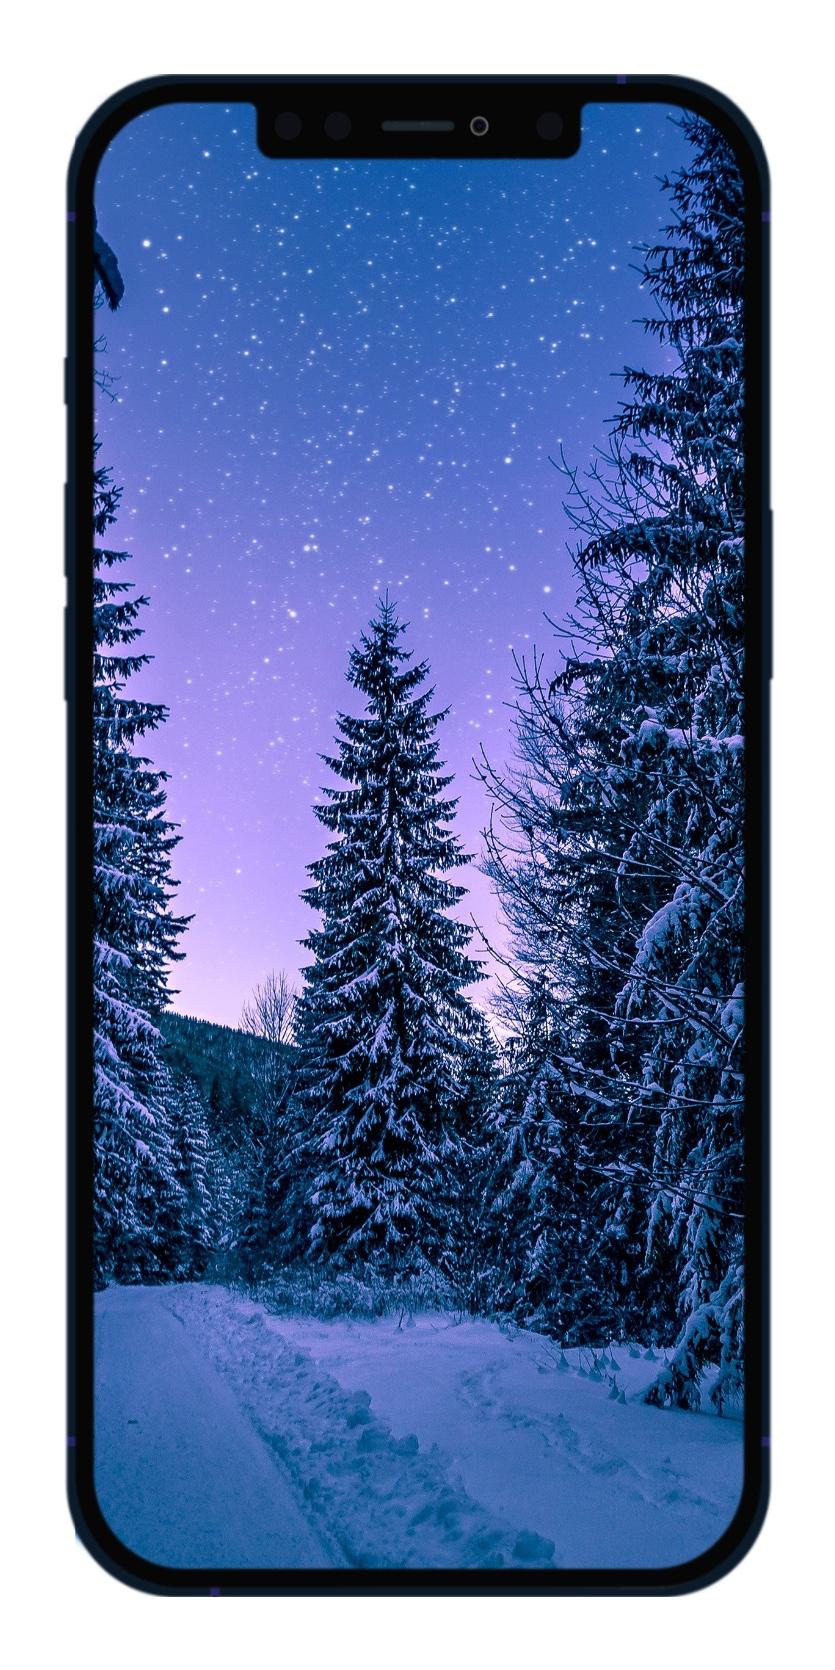 Зима картинки на айфон фотографии